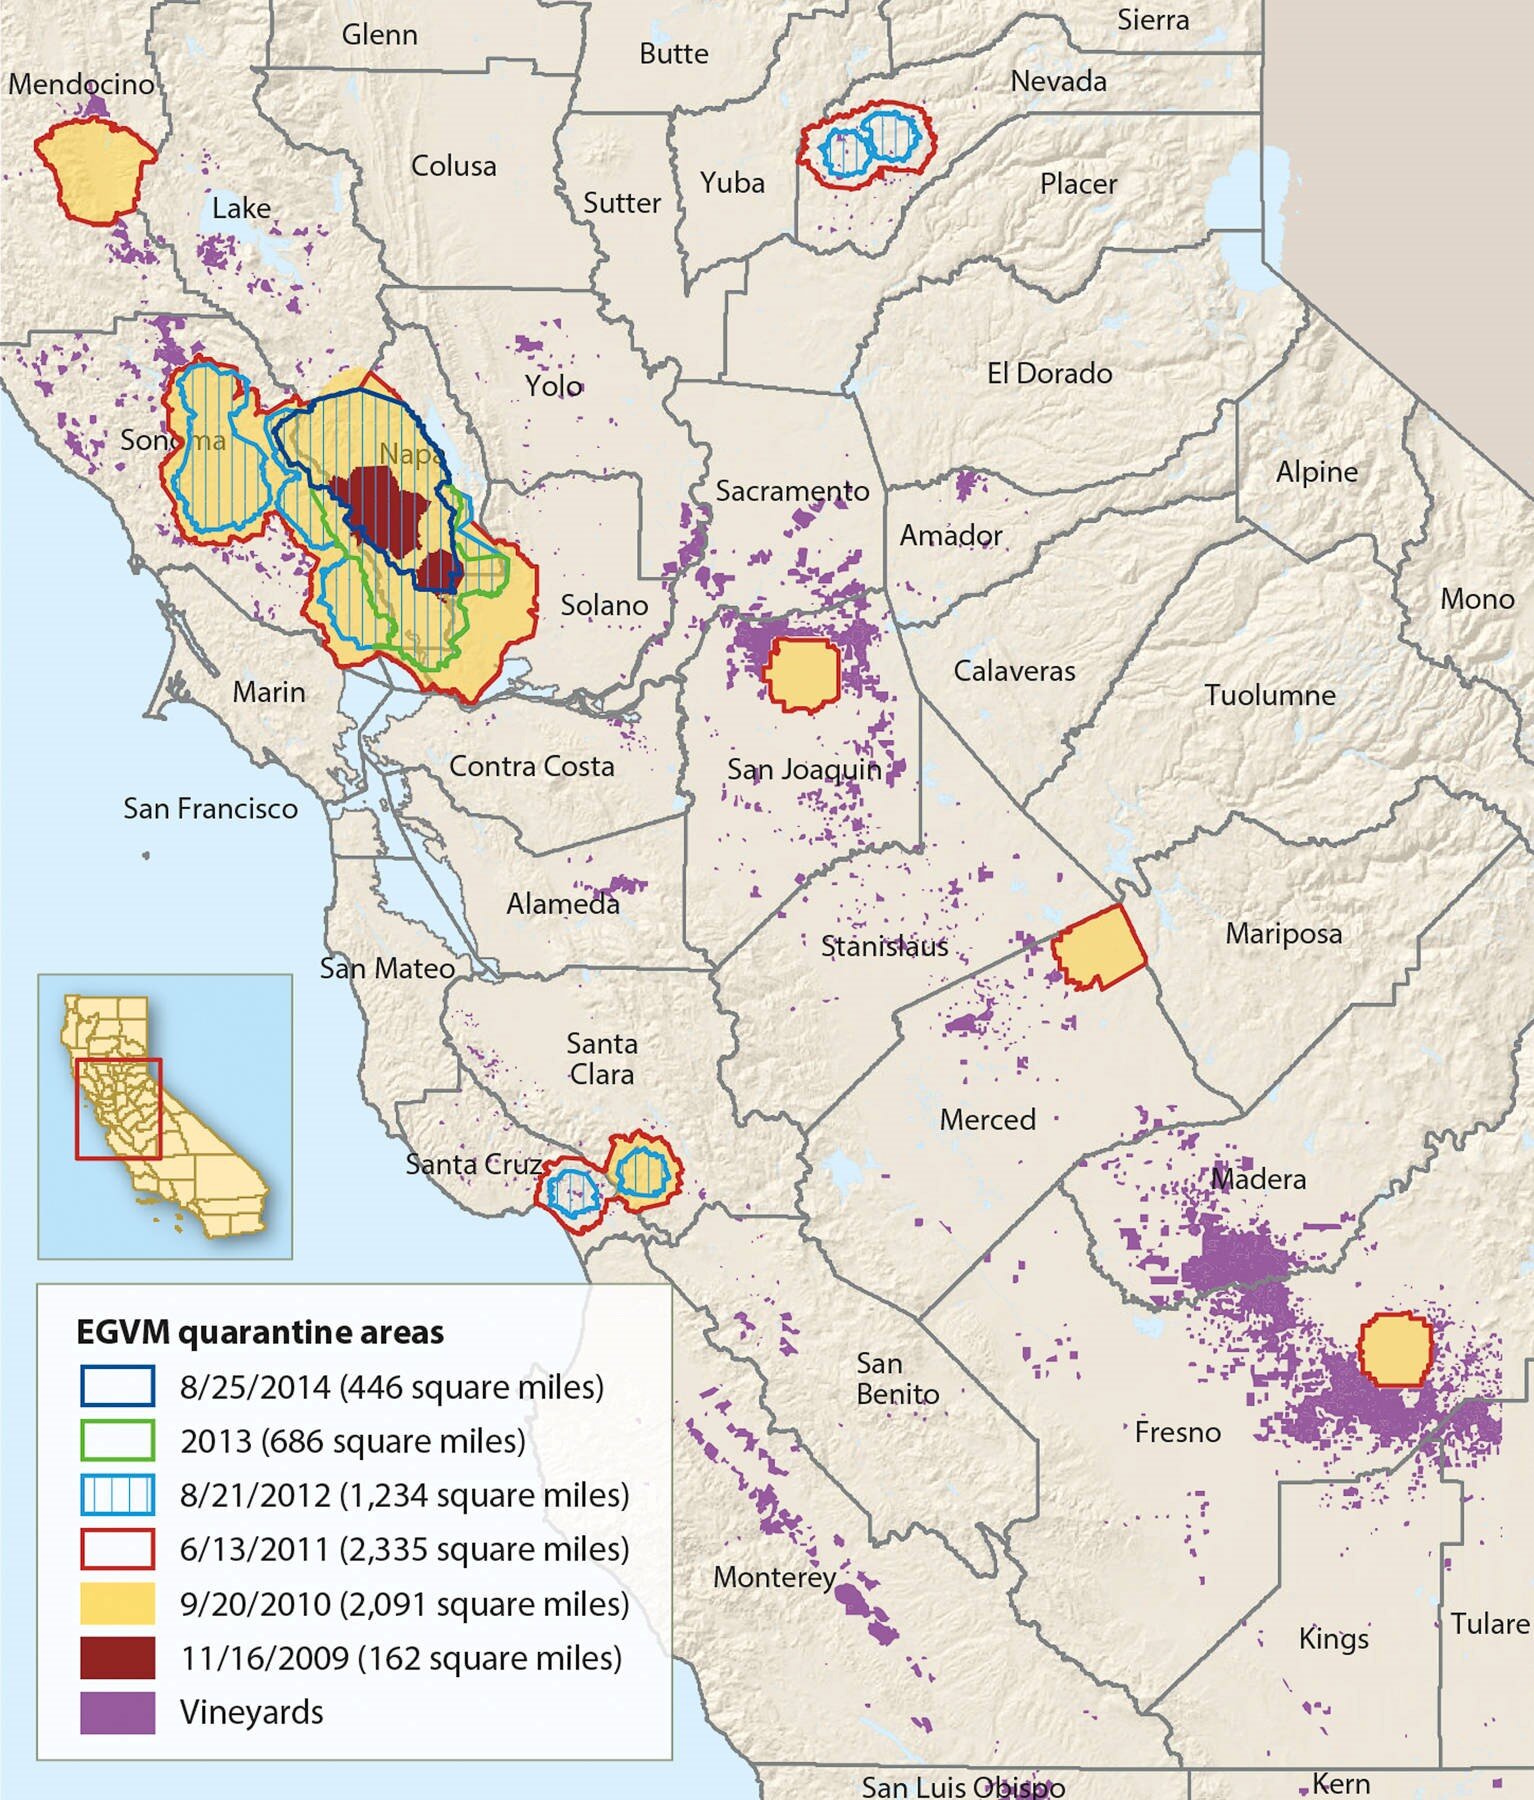 Historical progress  towards eradication of EVGM from California. University of California.